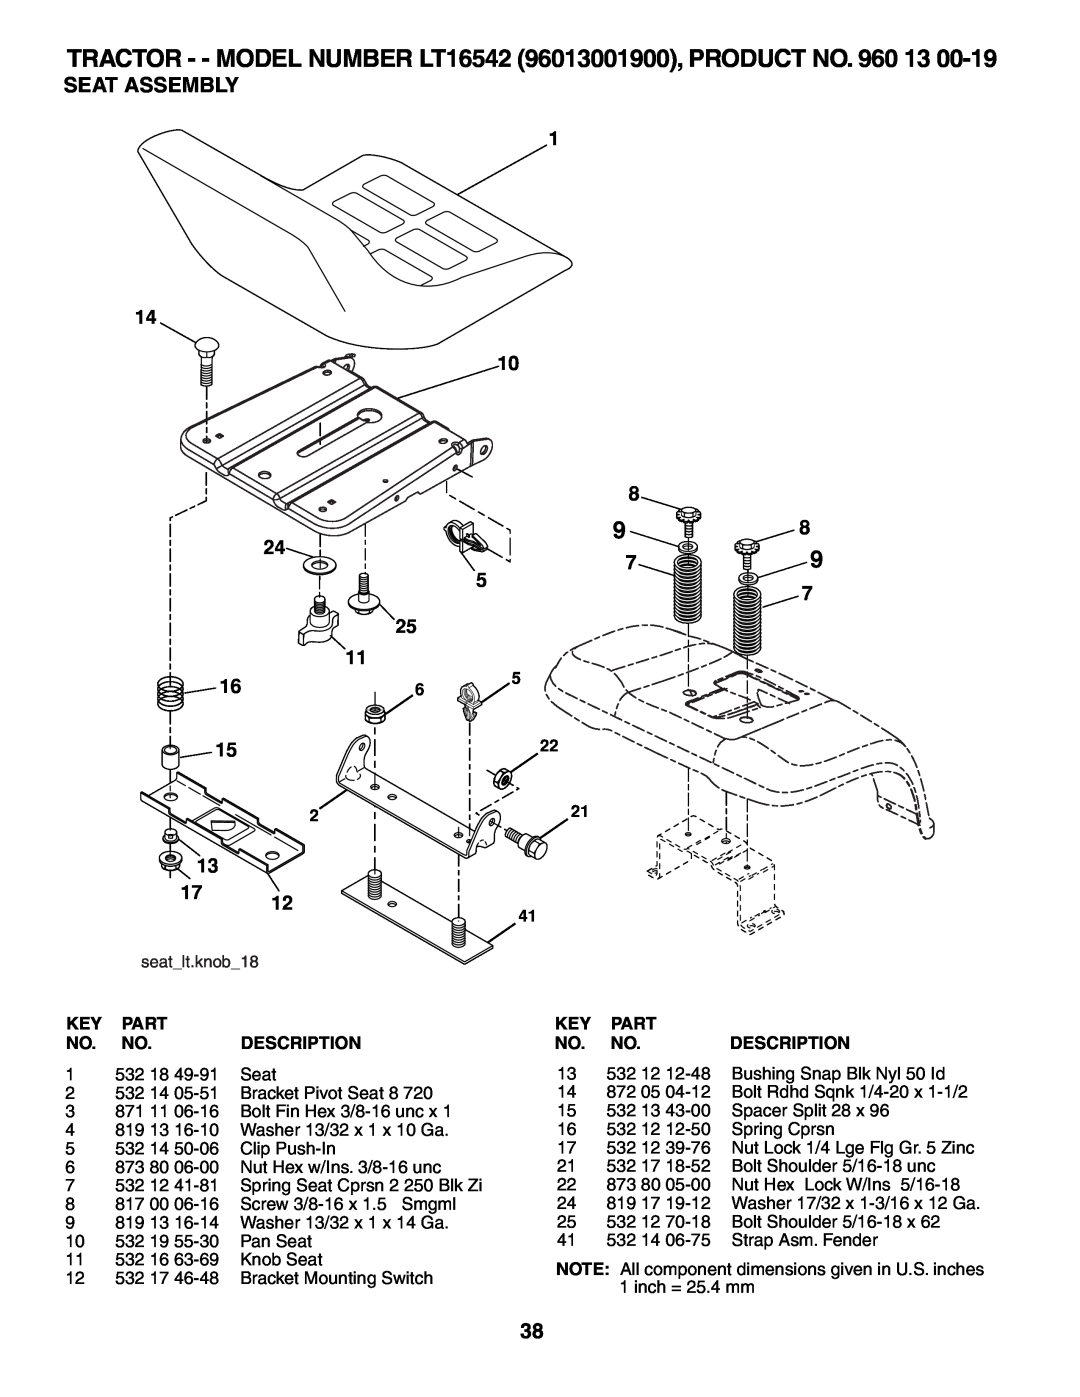 Husqvarna Seat Assembly, TRACTOR - - MODEL NUMBER LT16542 96013001900, PRODUCT NO. 960 13, Part, Description, 532 18 